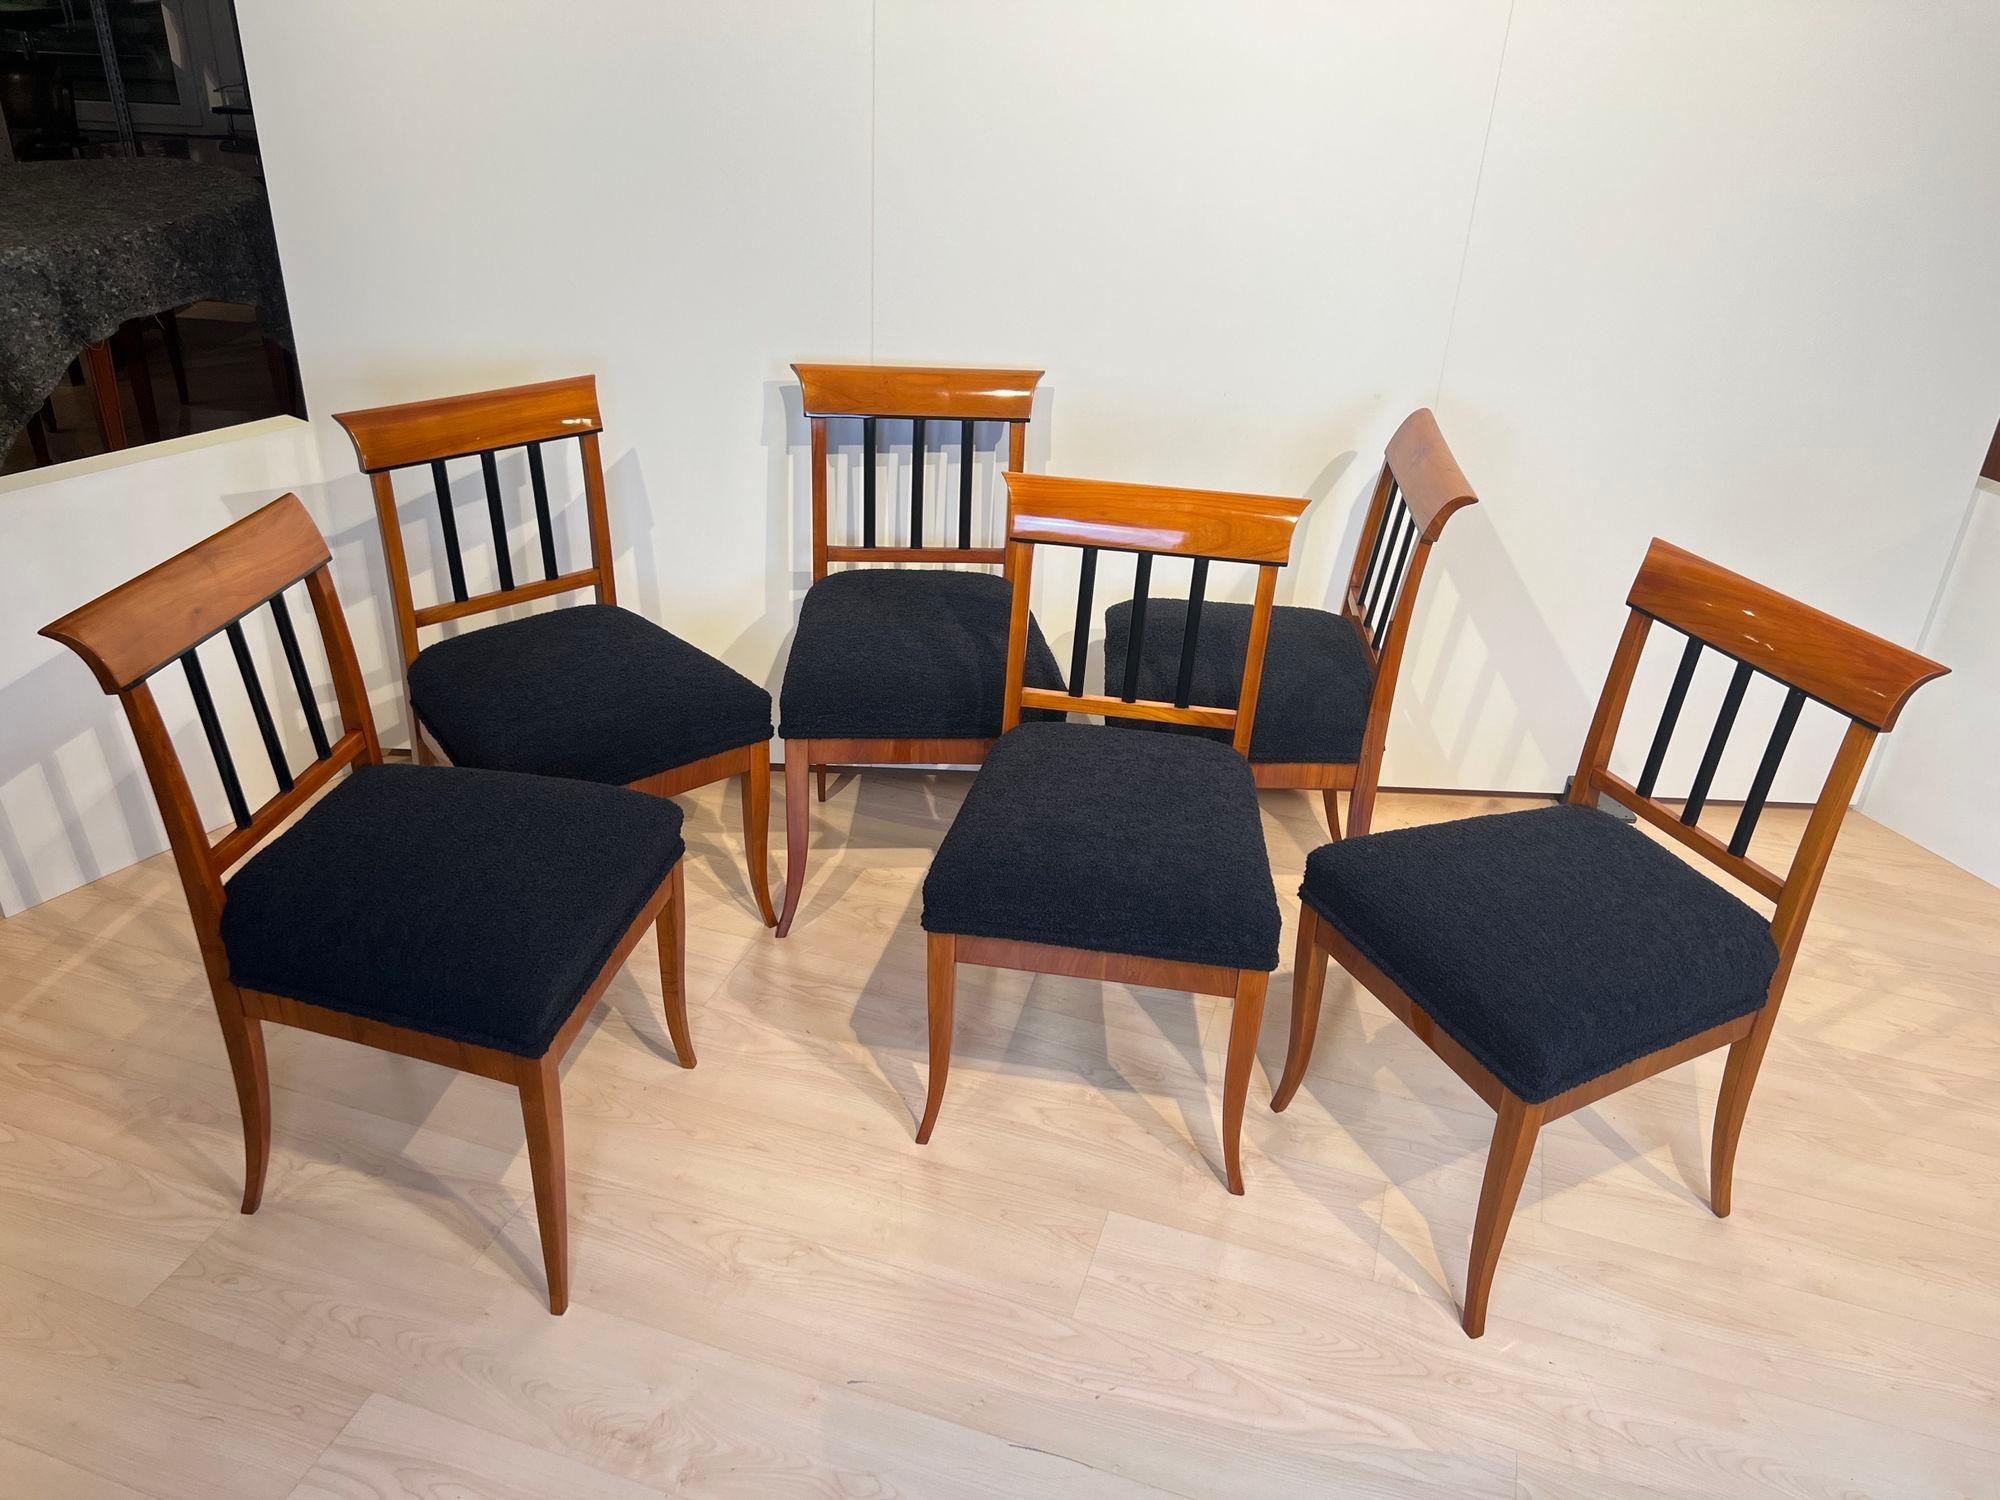 Early 19th Century Set of Six Biedermeier Chairs, Cherry Wood, Ebony, South Germany circa 1830 For Sale